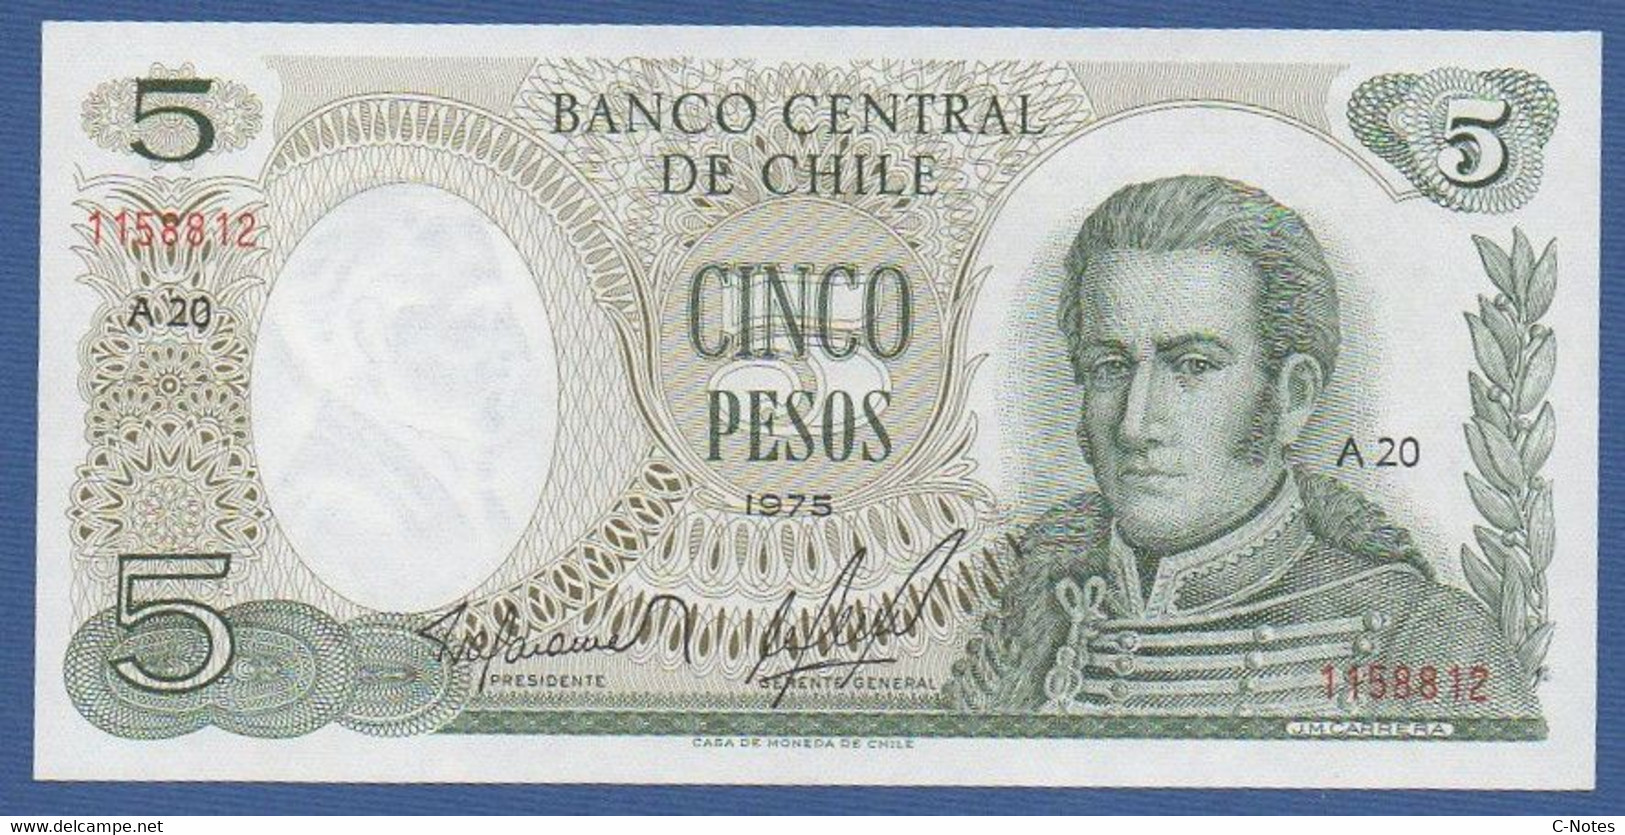 CHILE - P.149a – 5 Pesos 1975 UNC, Serie A20 1158812 - Cile